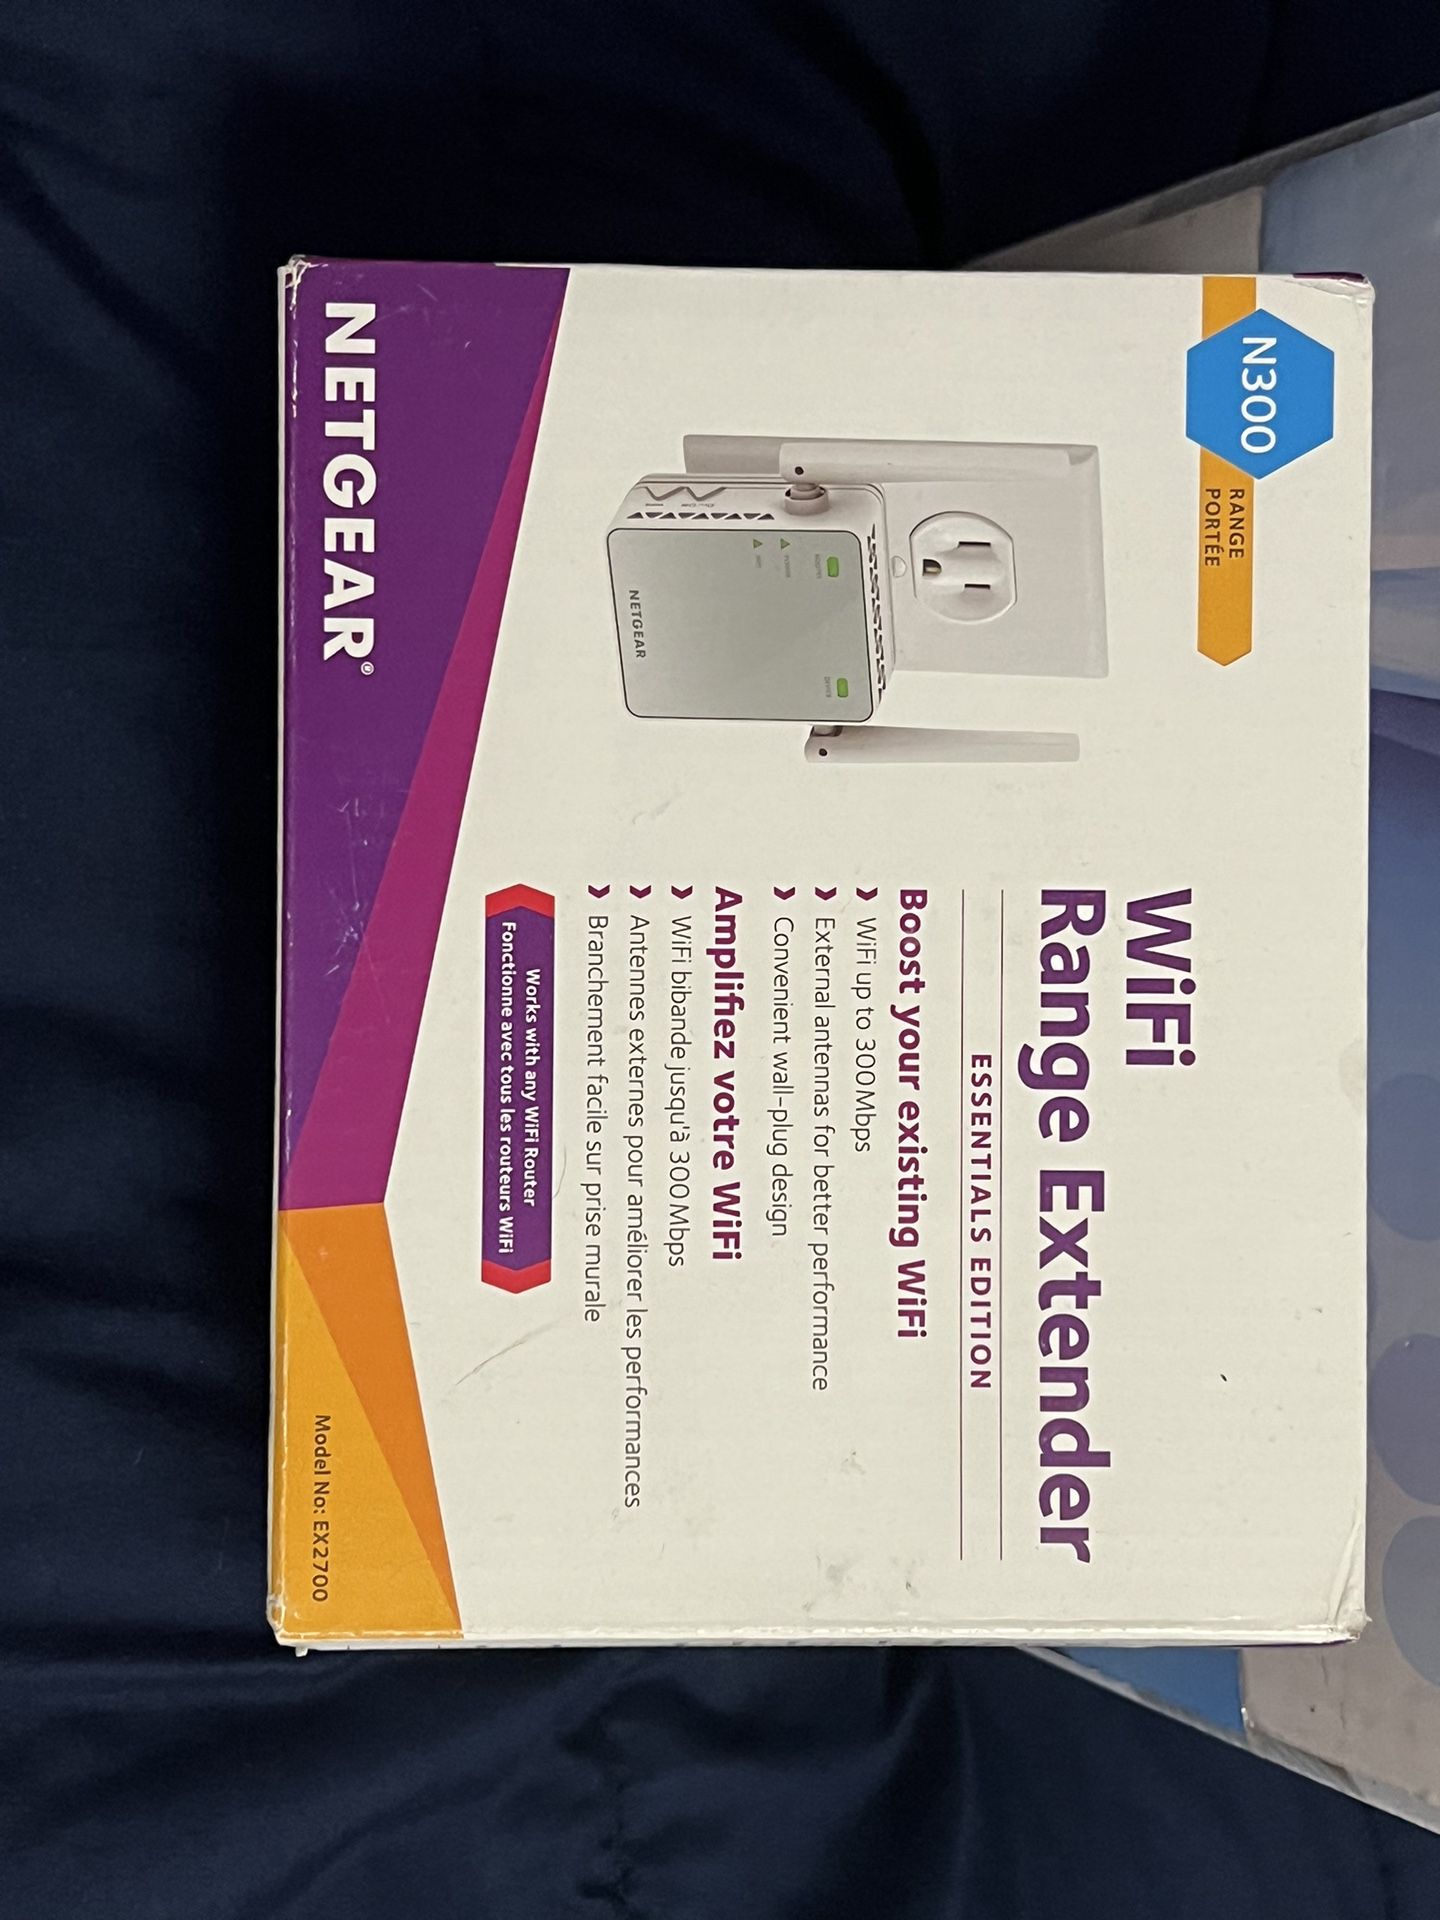 NETGEAR N300 WiFi Range Extender